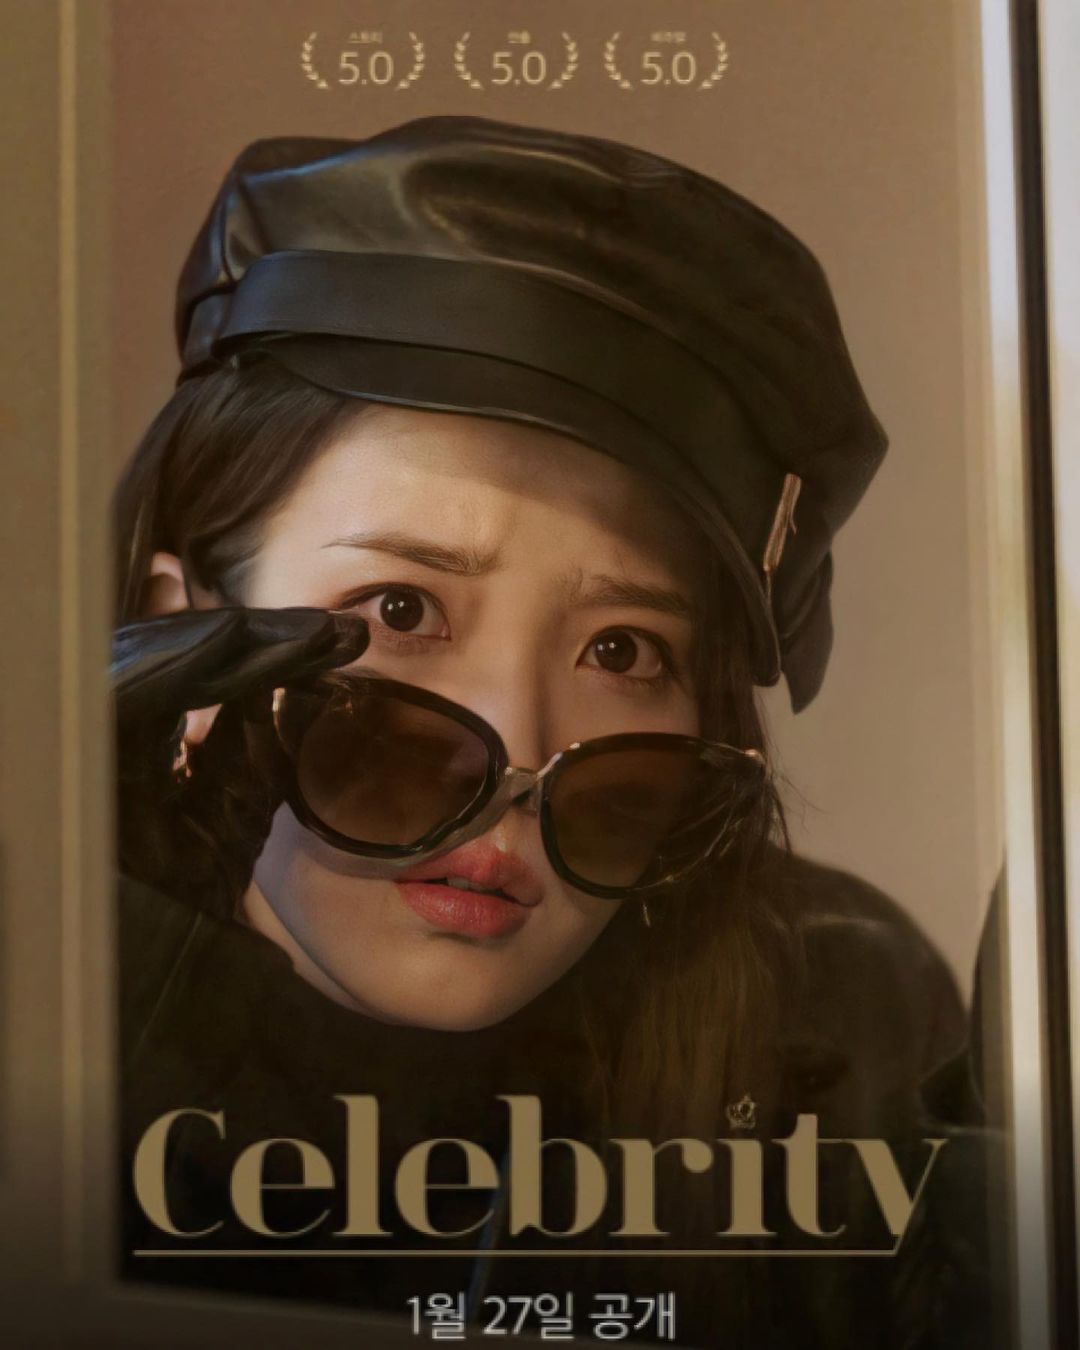 Watch: IU's Teaser for 'Celebrity' MV Surpasses 1 Million Views - KpopHit -  KPOP HIT